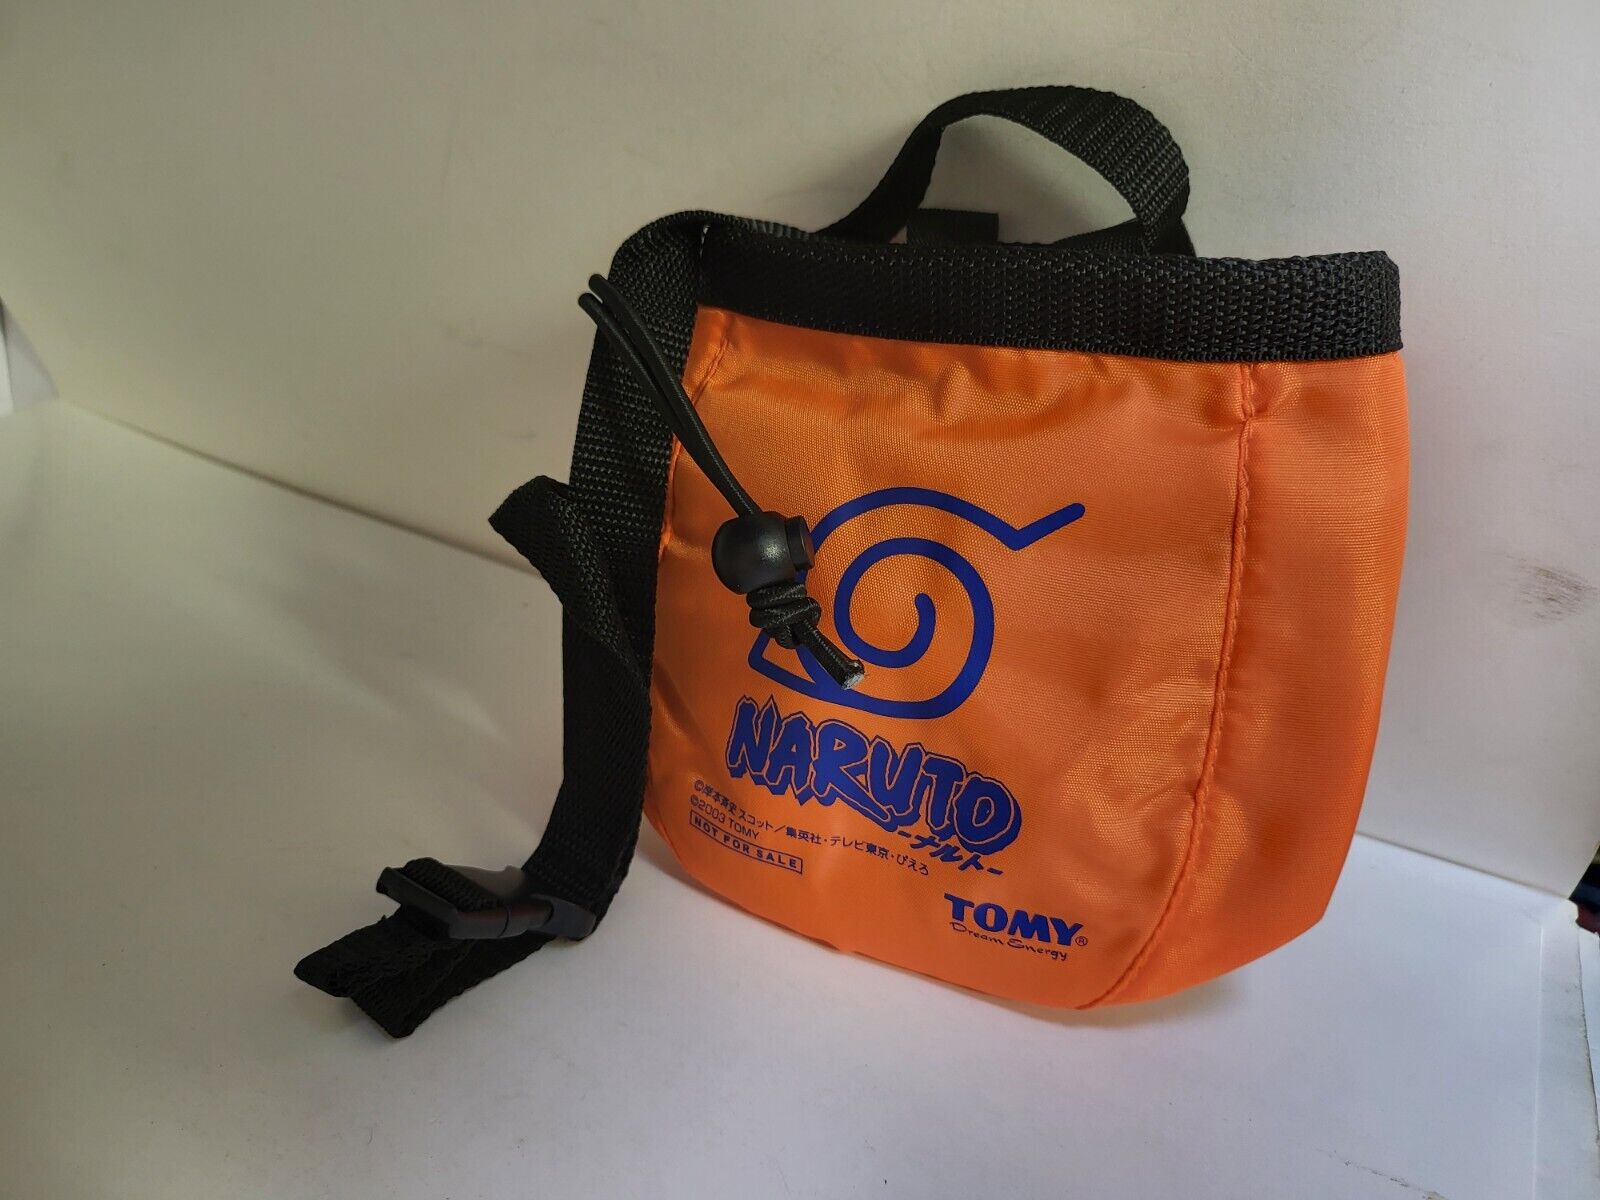 NEW Official Tomy NARUTO Orange Pouch Bag Purse W/drawstring + Shoulder strap E5